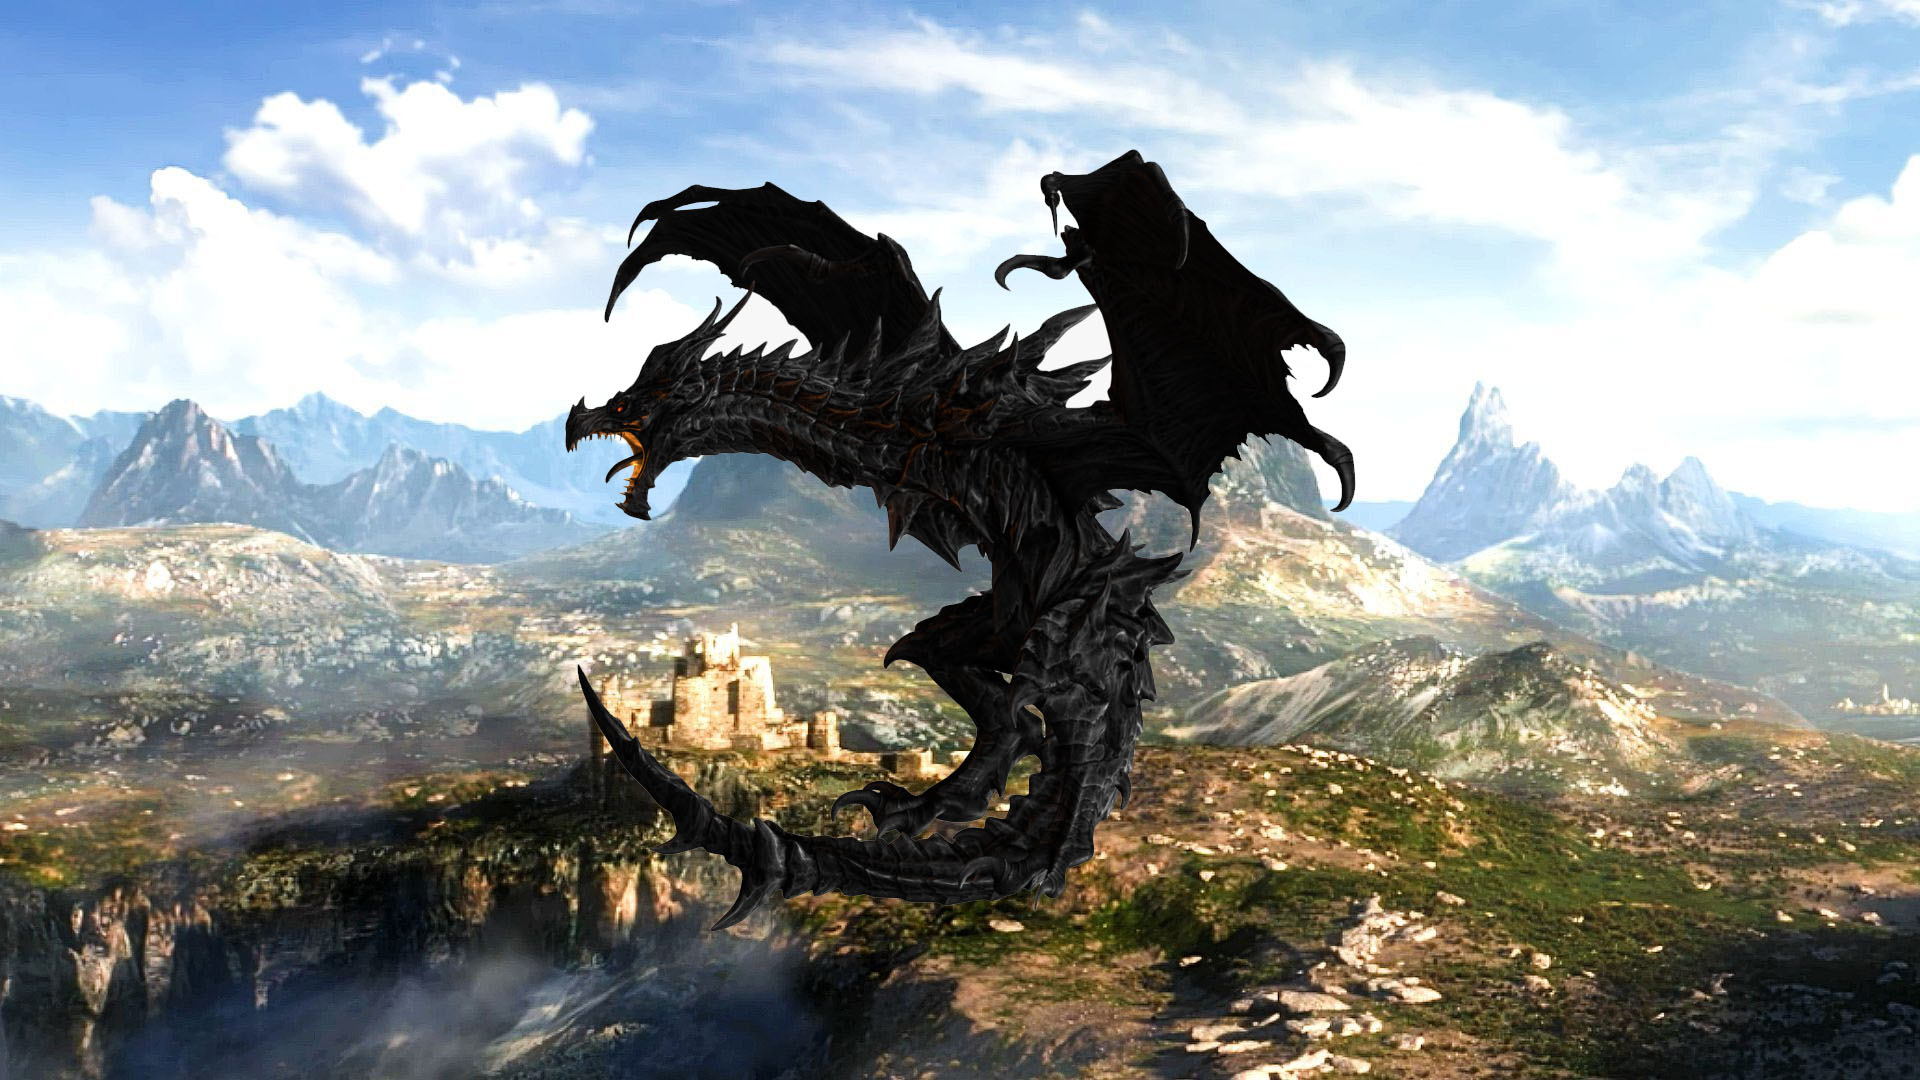 Elder Scrolls 6 isn't in development, says Bethesda